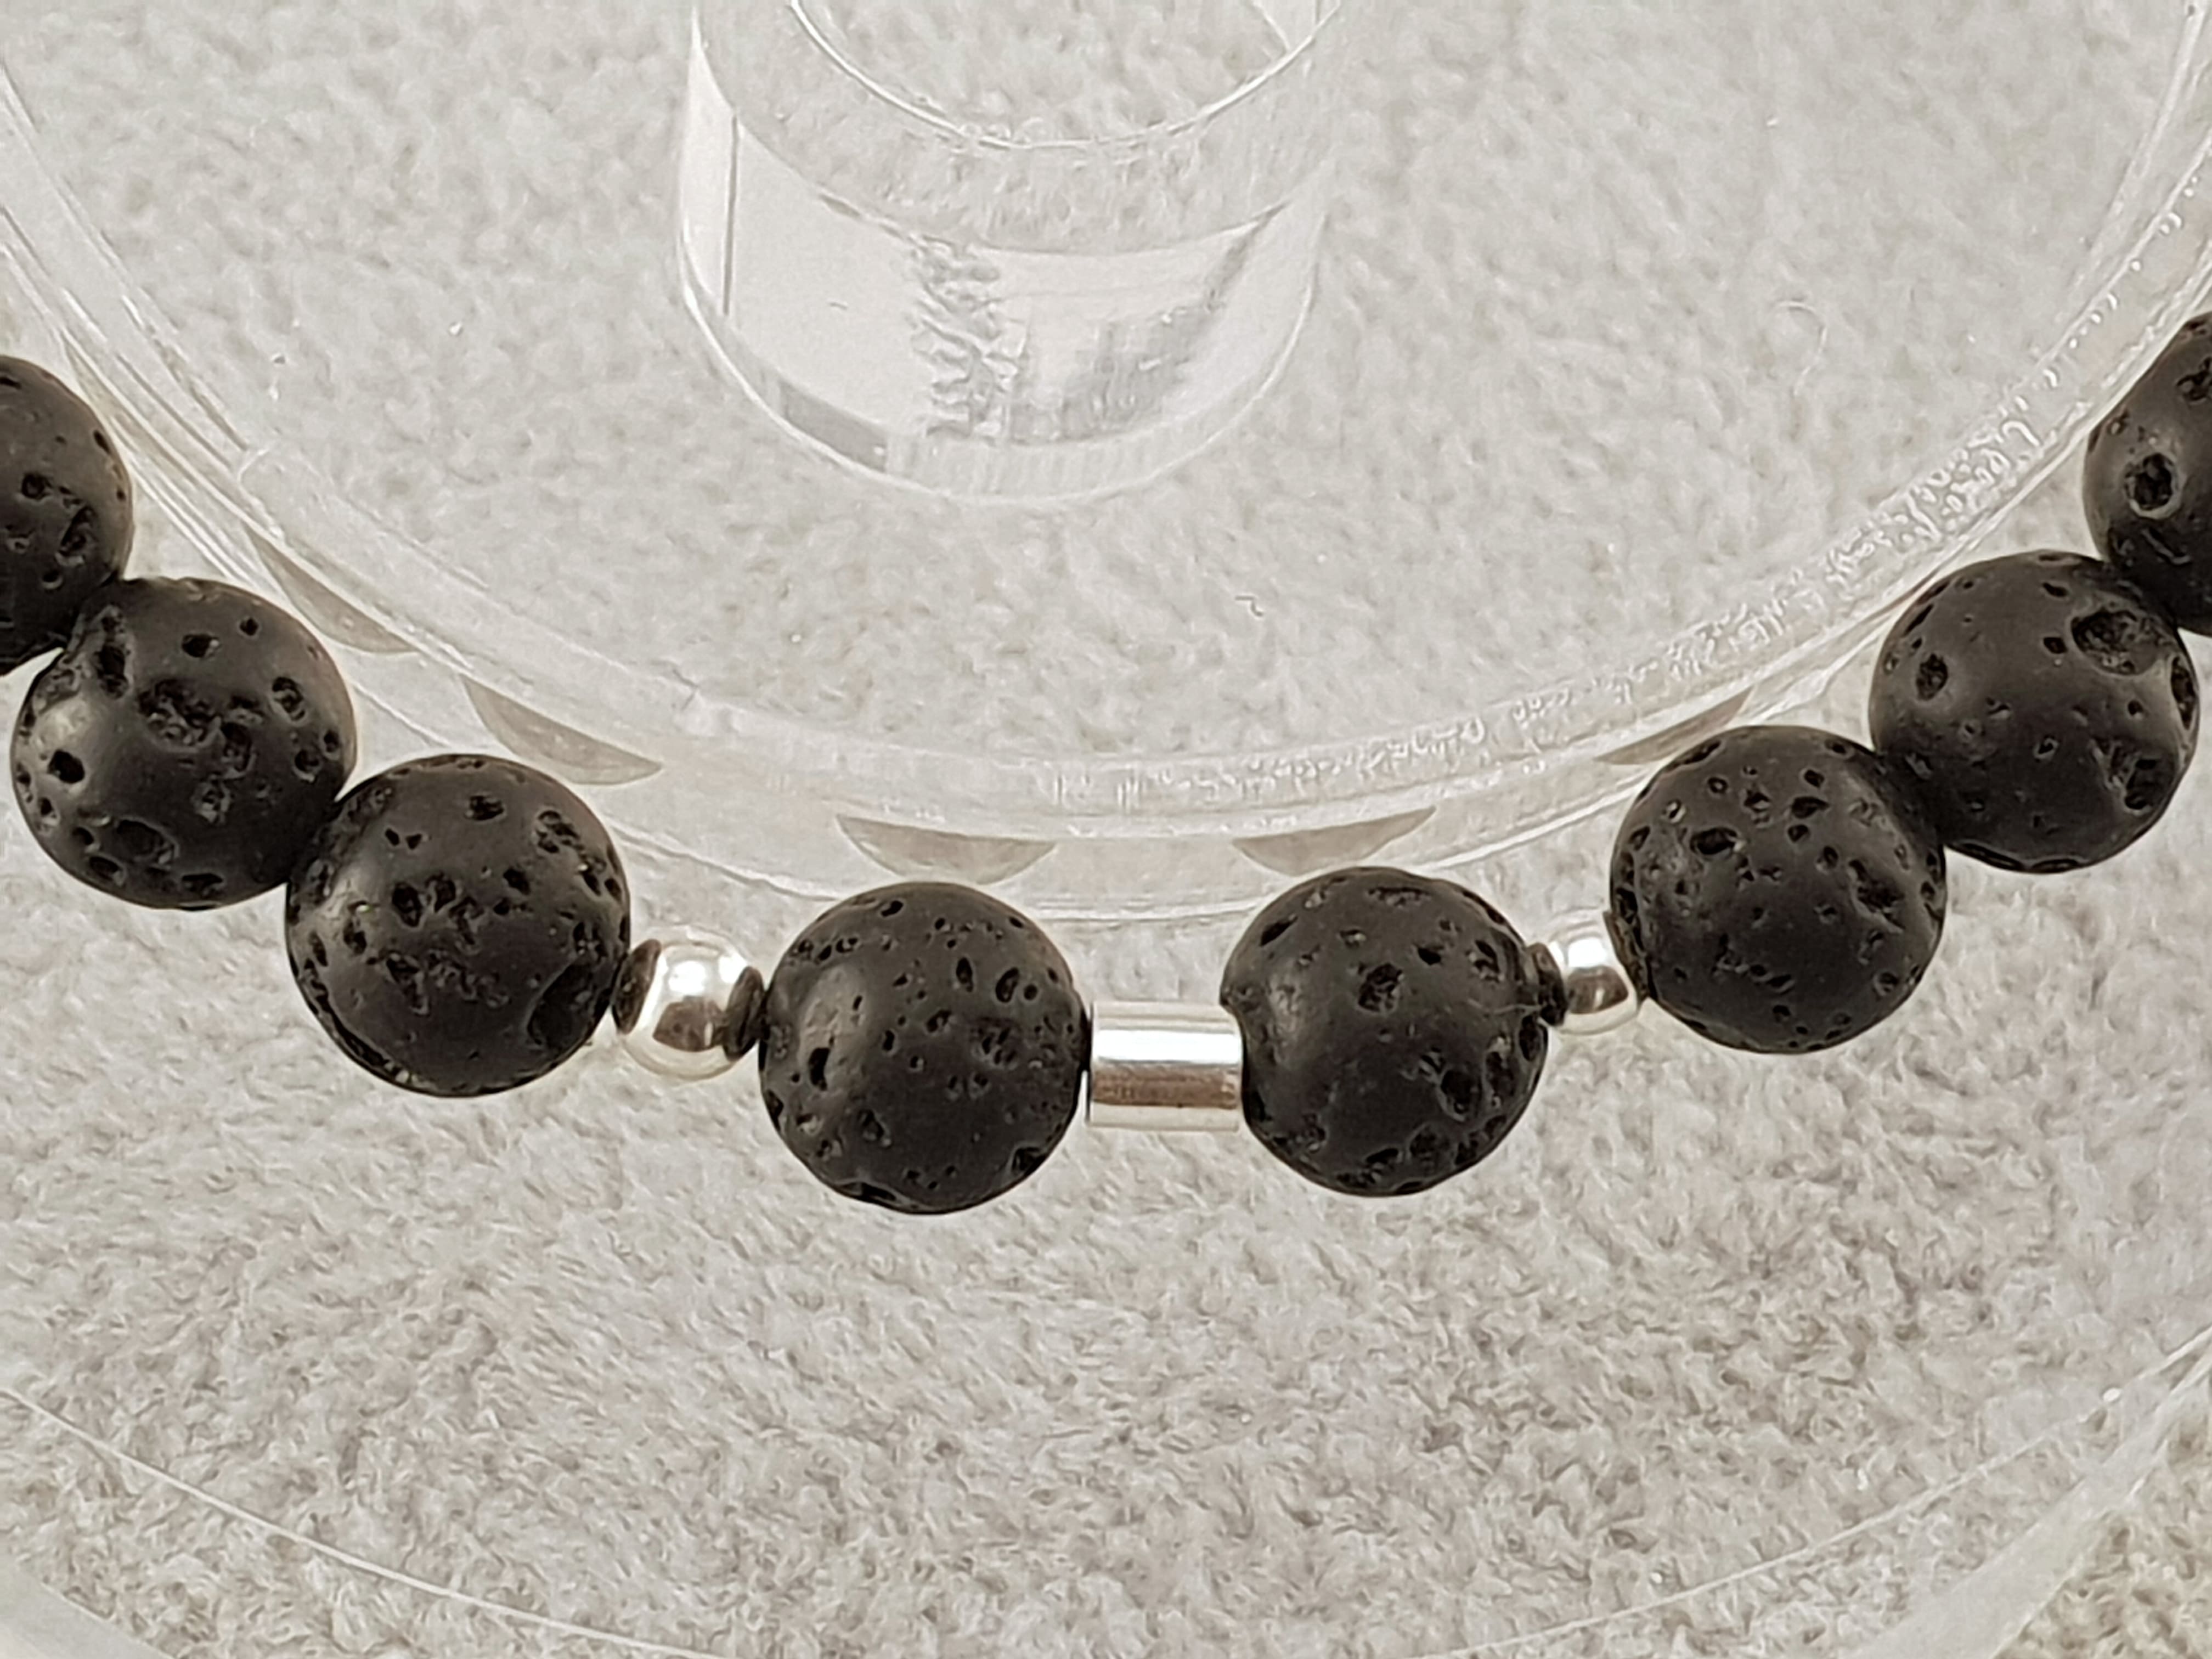 Lava beads - Black - By Janine Jewellery